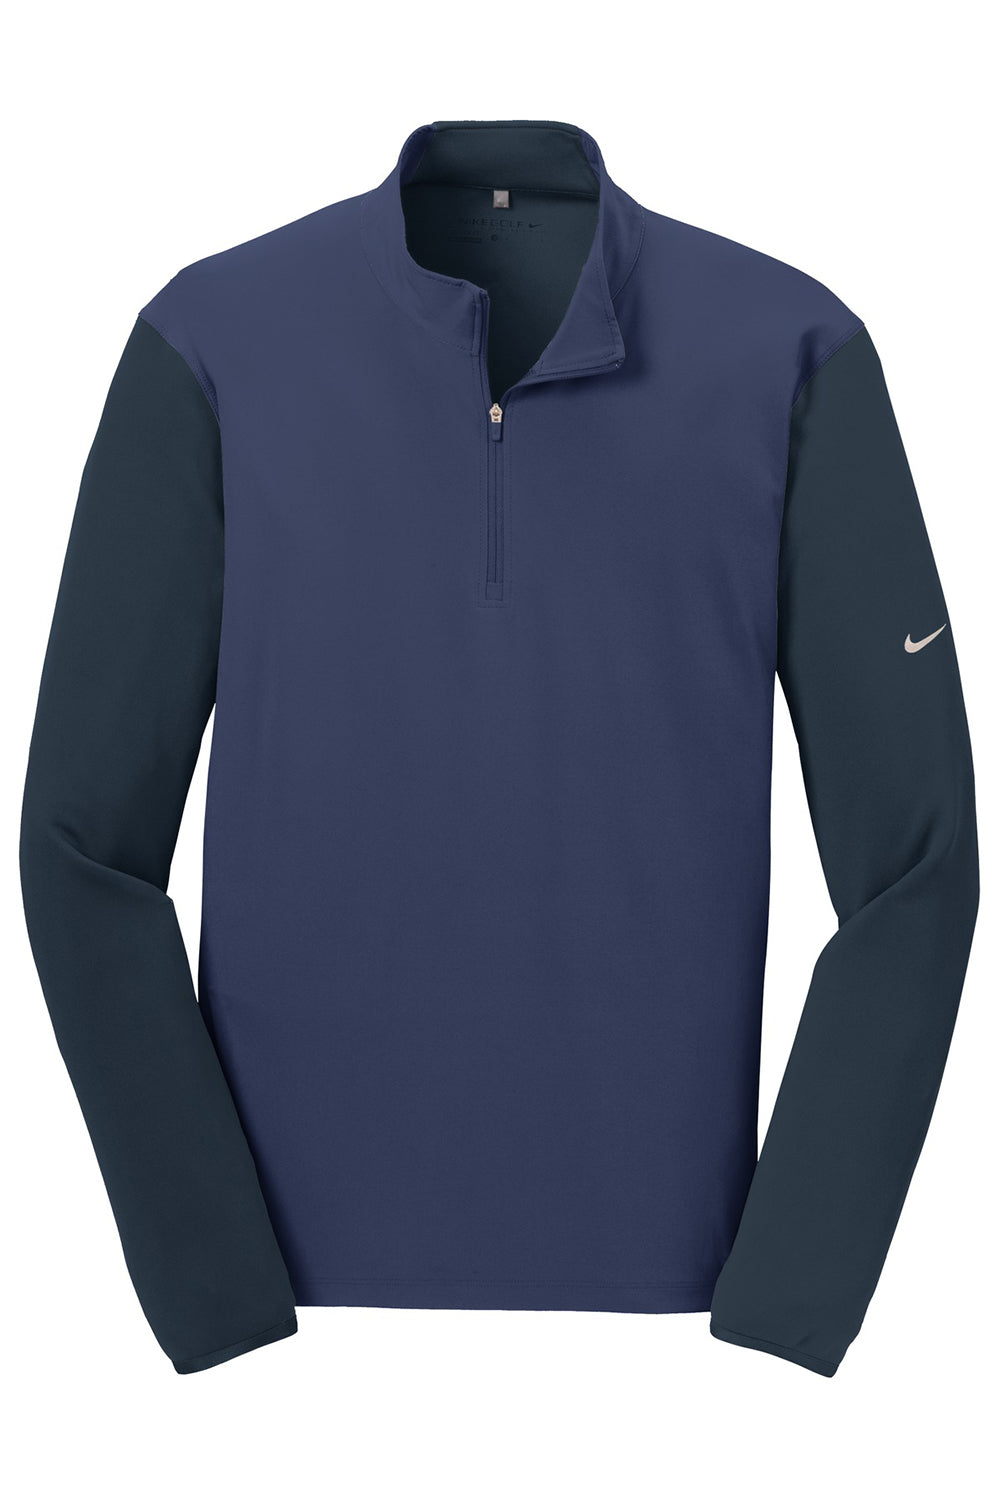 Nike 746102 Mens Dri-Fit Moisture Wicking 1/4 Zip Sweatshirt Midnight Navy Blue/Obsidian Blue Flat Front